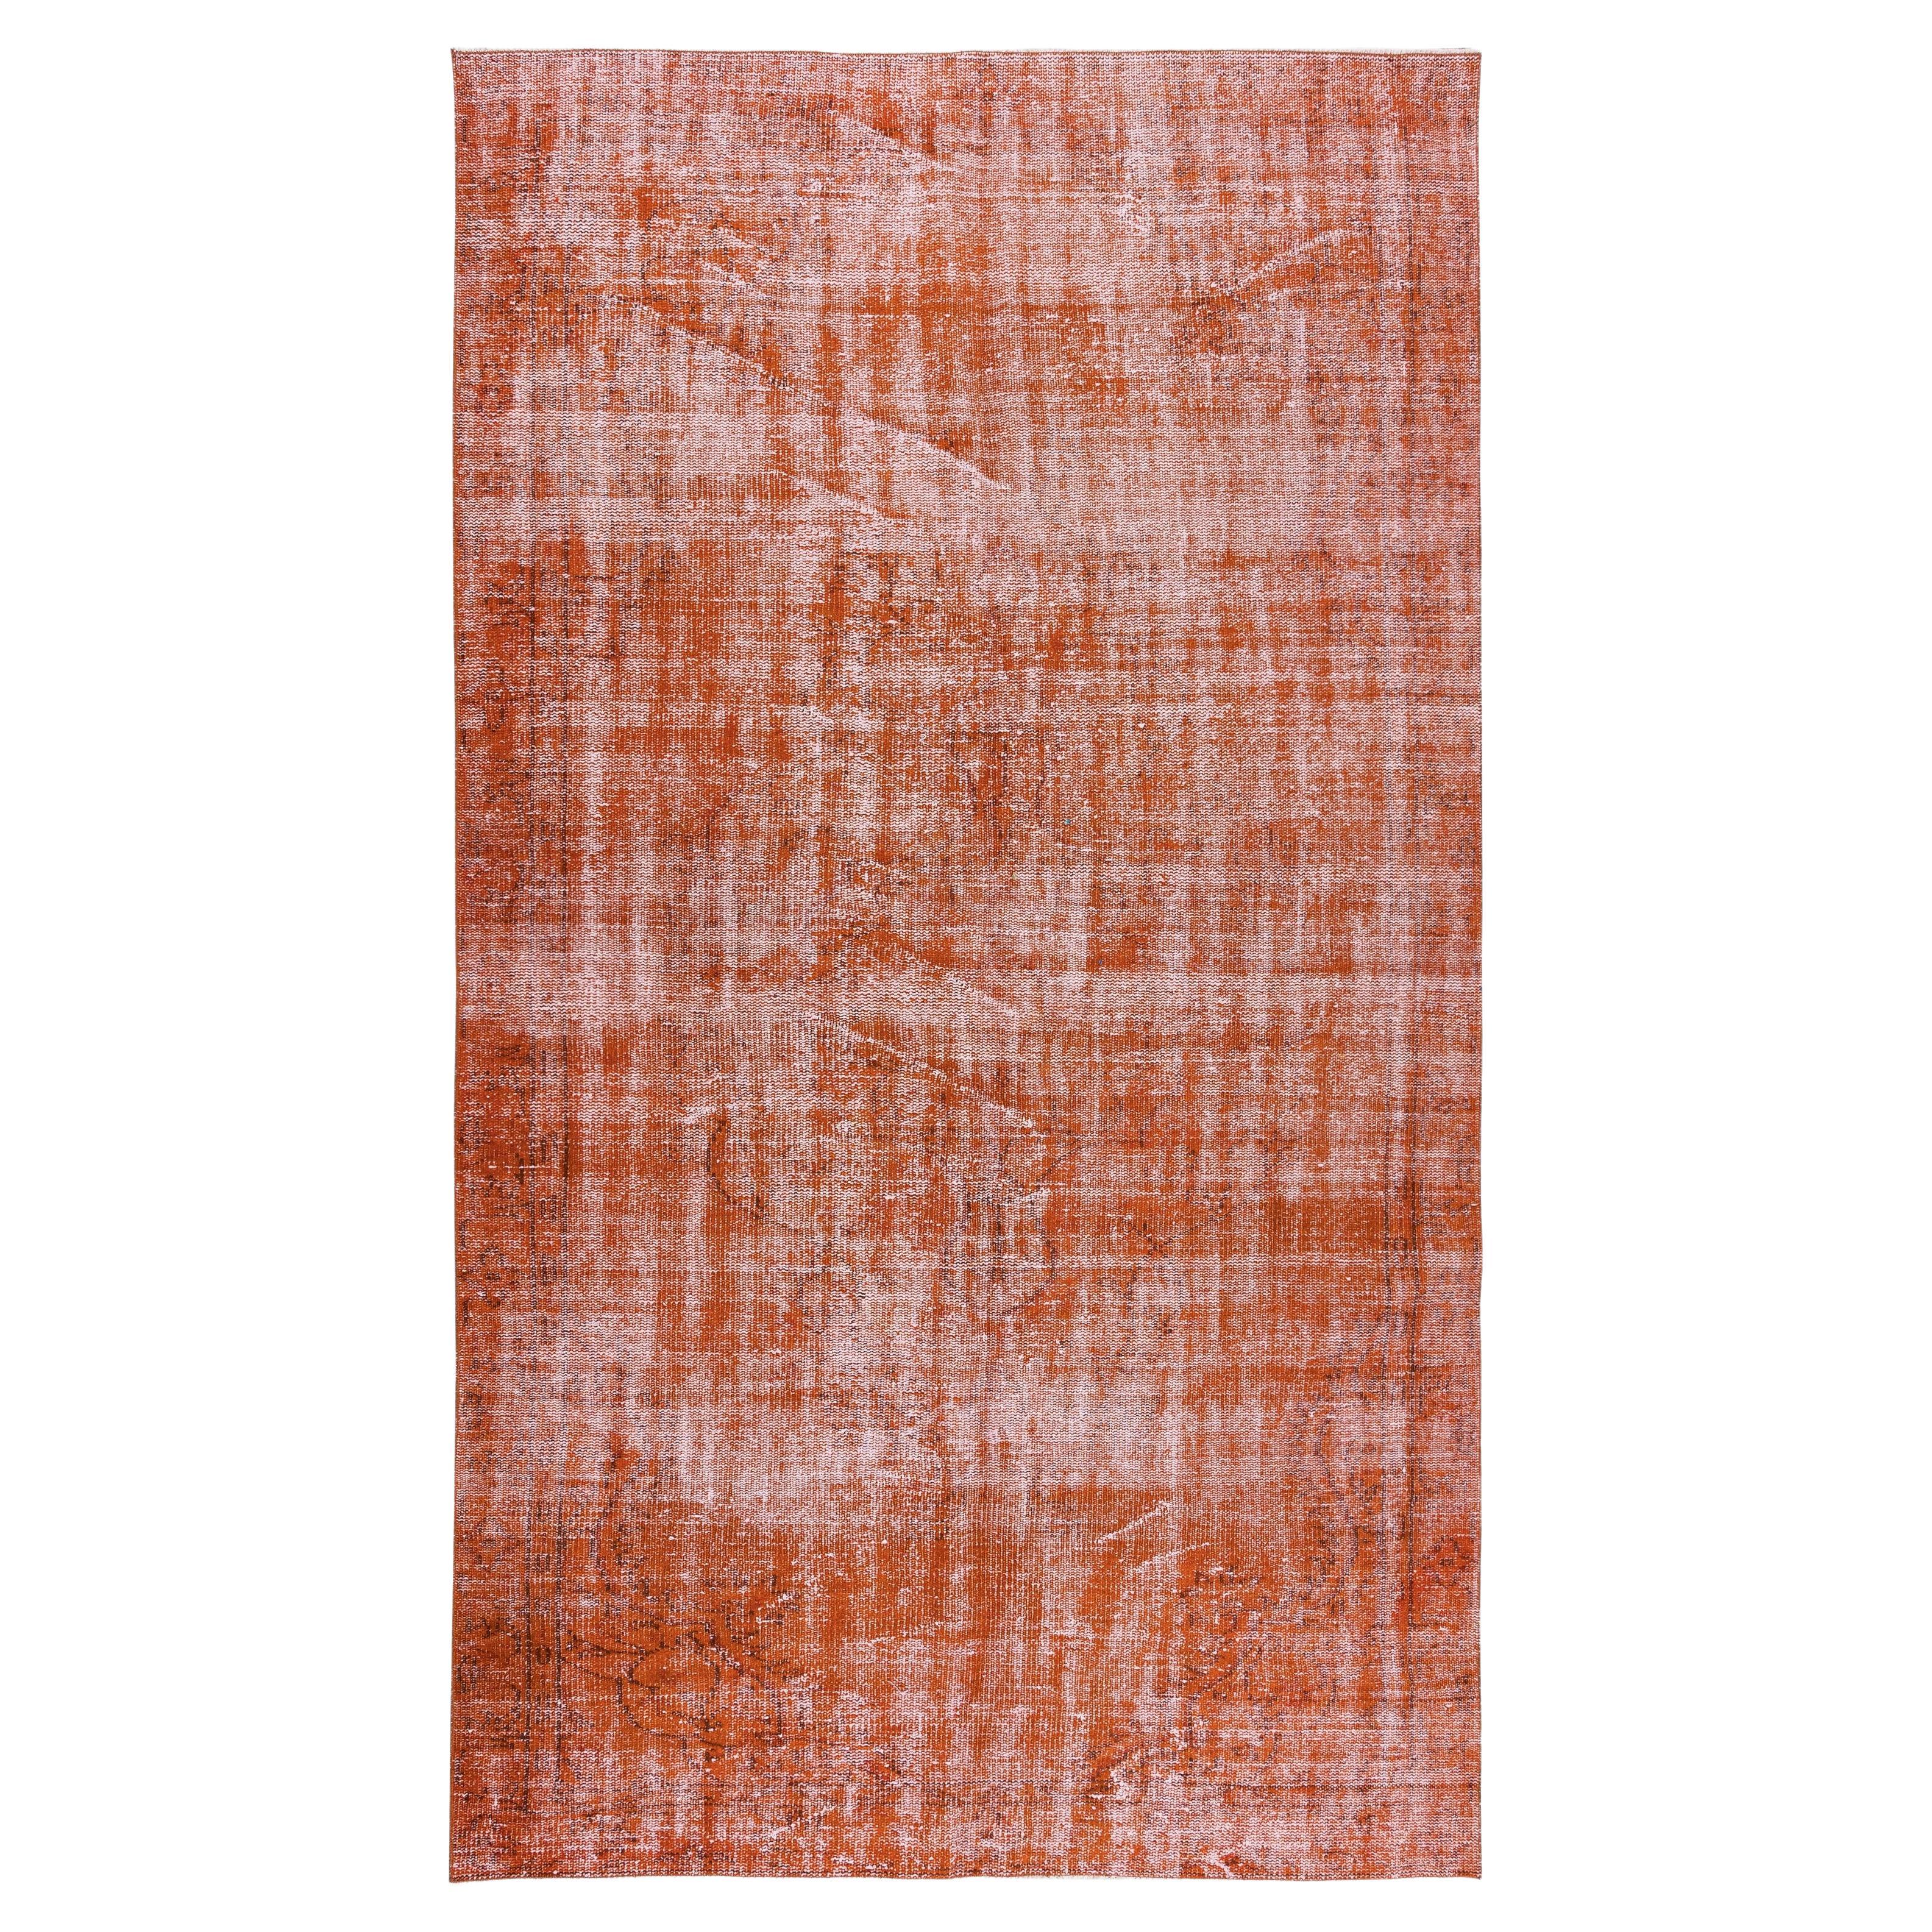 Orange Re-Dyed Rug, 1960s Turkish Handmade Carpet for Modern Interior